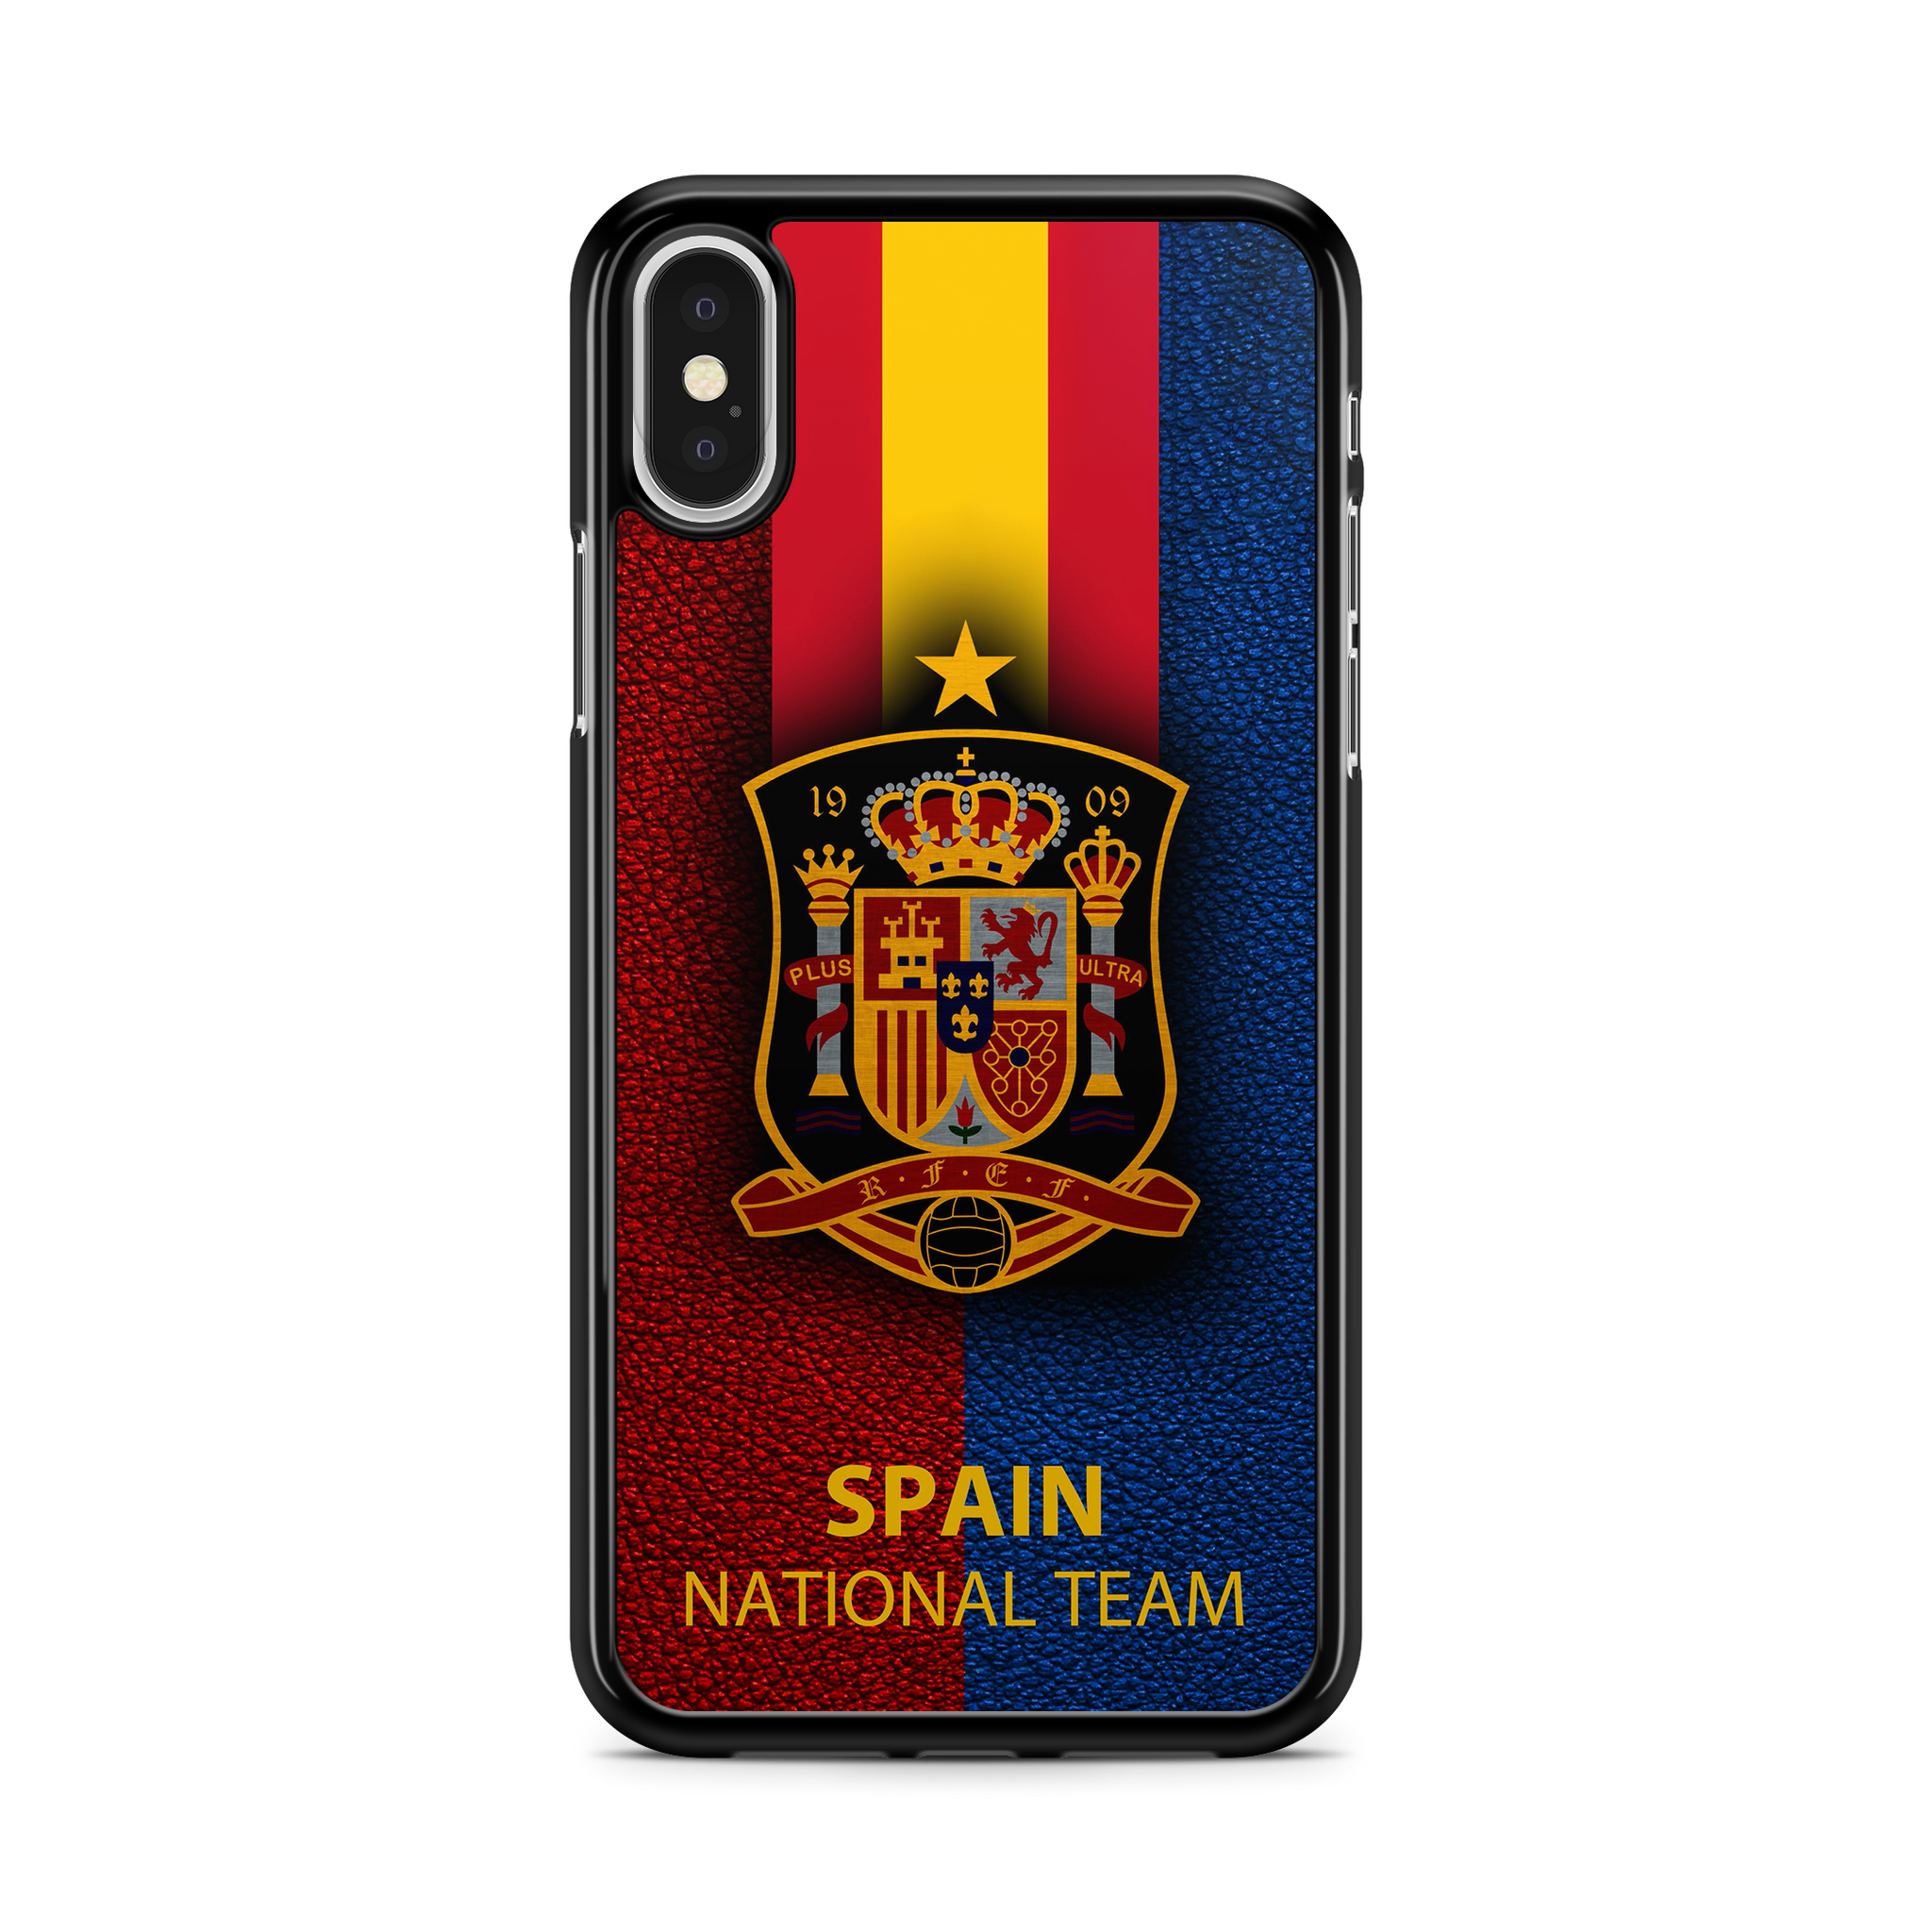 SPAIN NATIONAL TEAM